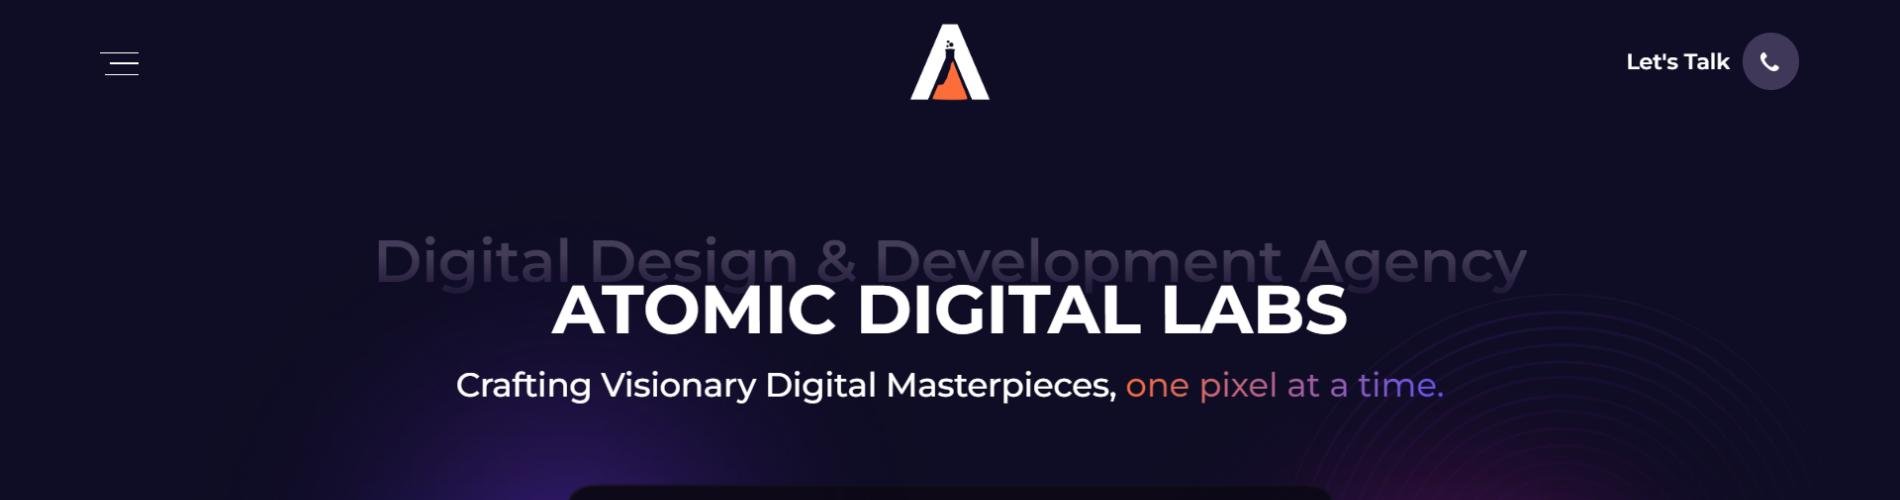 Atomic Digital Labs cover